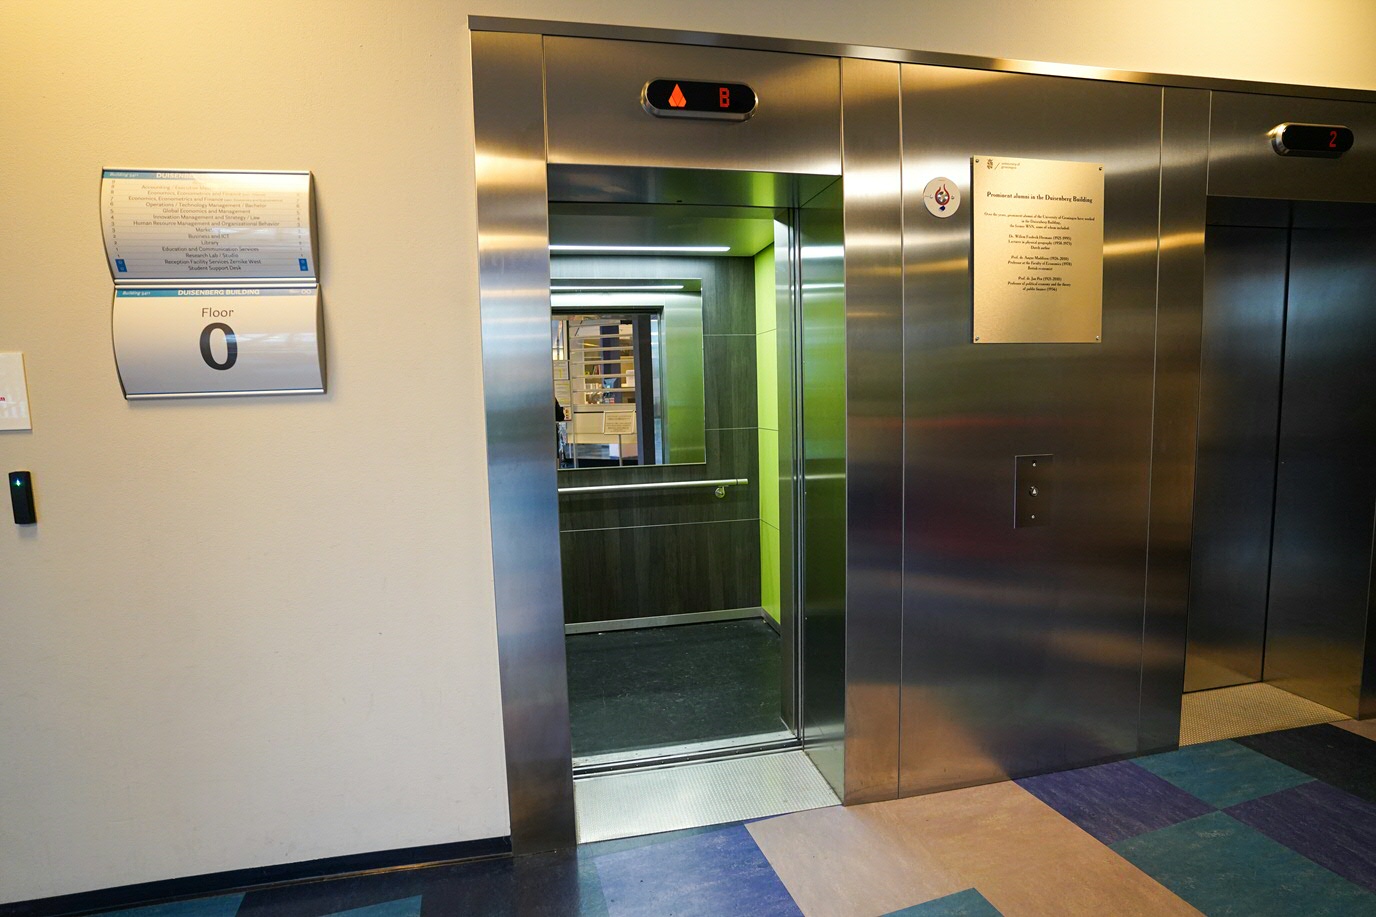 Elevators in Duisenberg plaza